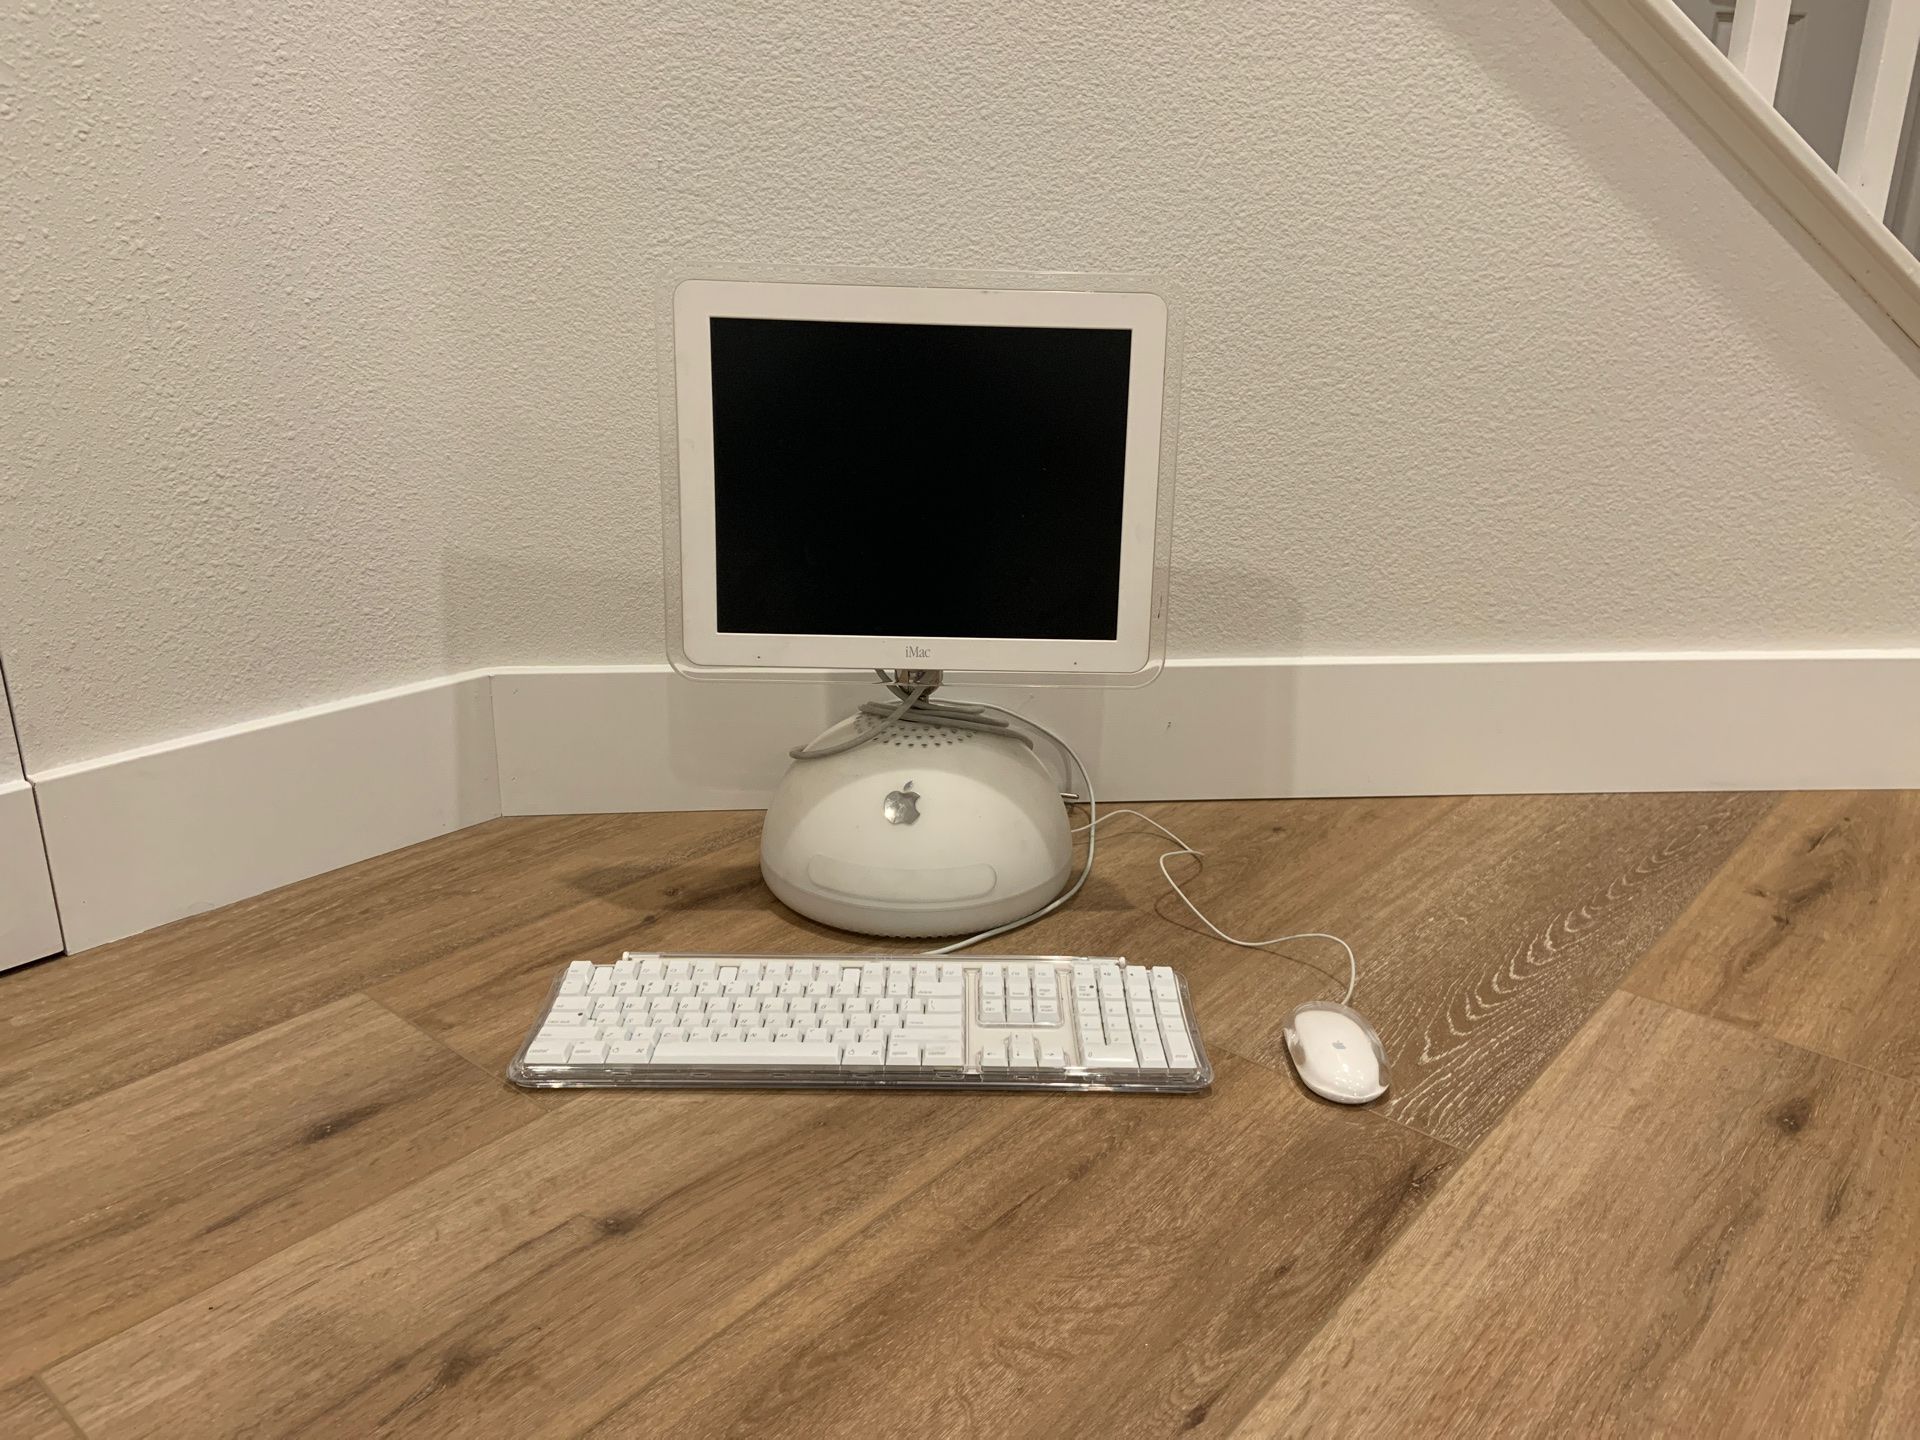 iMac G4 with Adobe Design Suite